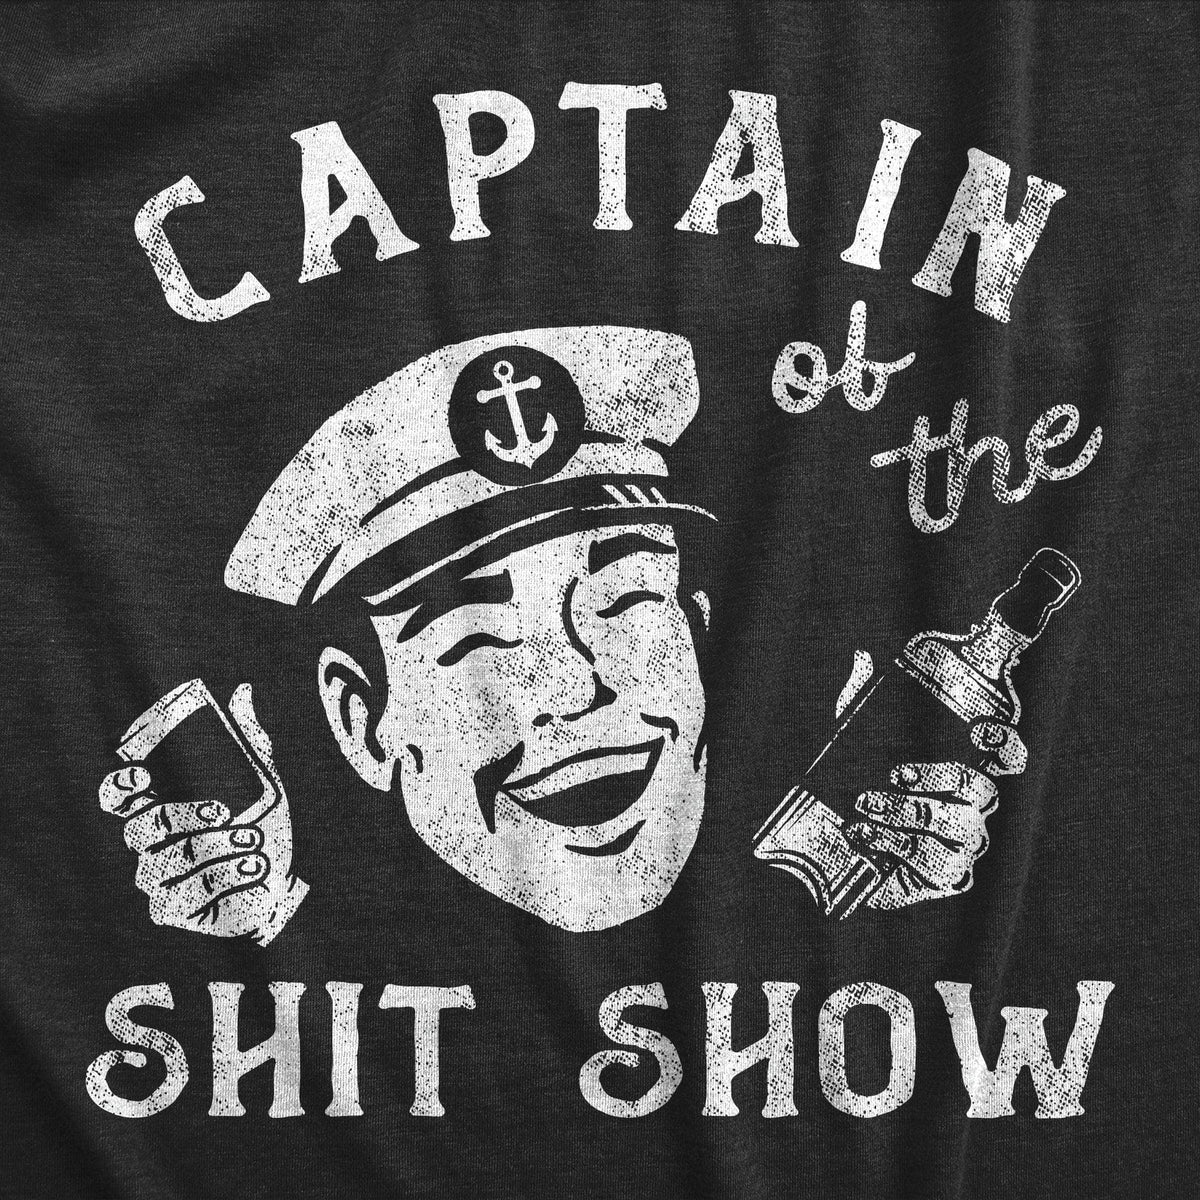 Captain Of The Shit Show Men&#39;s Tshirt  -  Crazy Dog T-Shirts